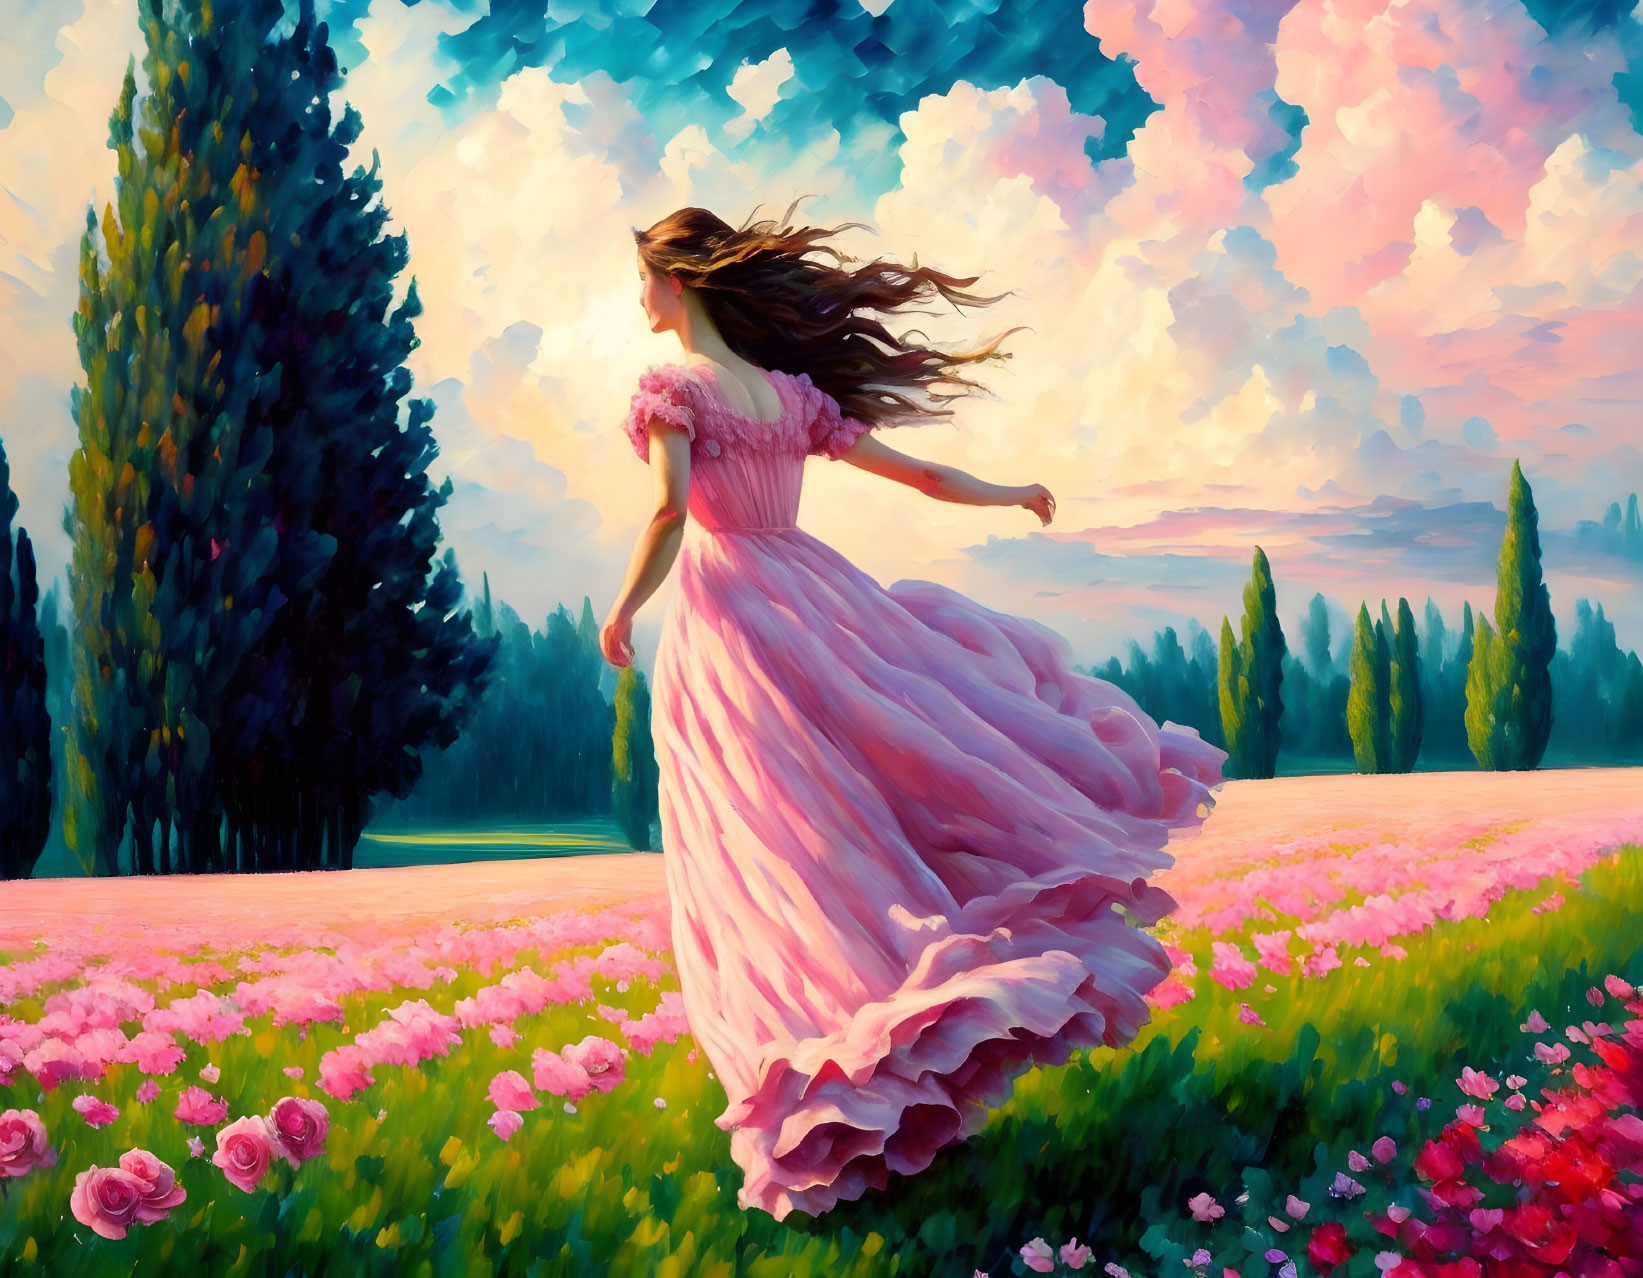 Woman in Pink Dress Running Through Vibrant Flower Field